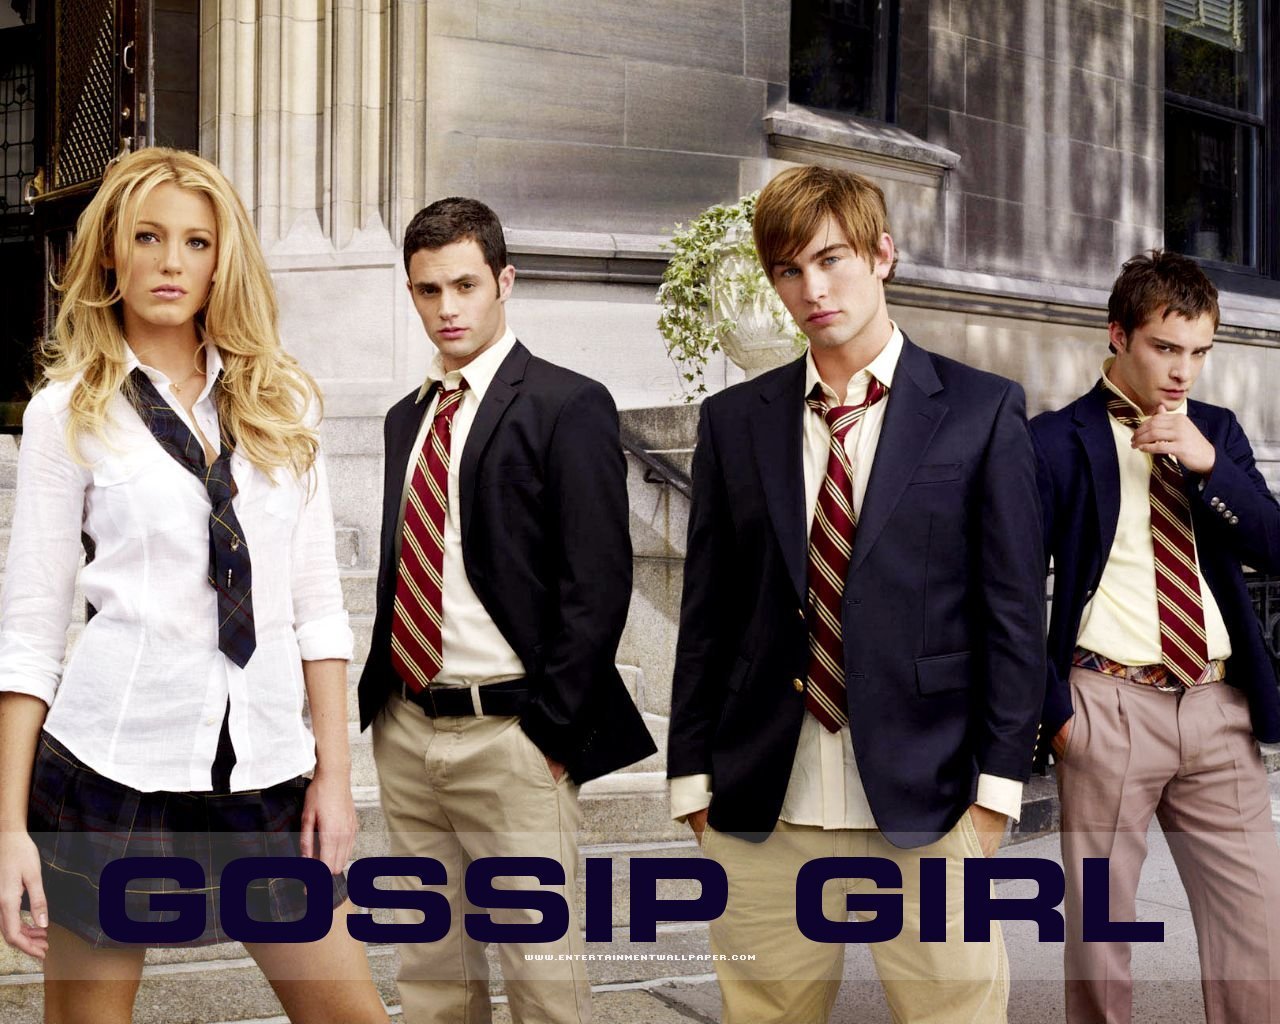 Gossip Girl - Gossip Girl Wallpaper (4007177) - Fanpop